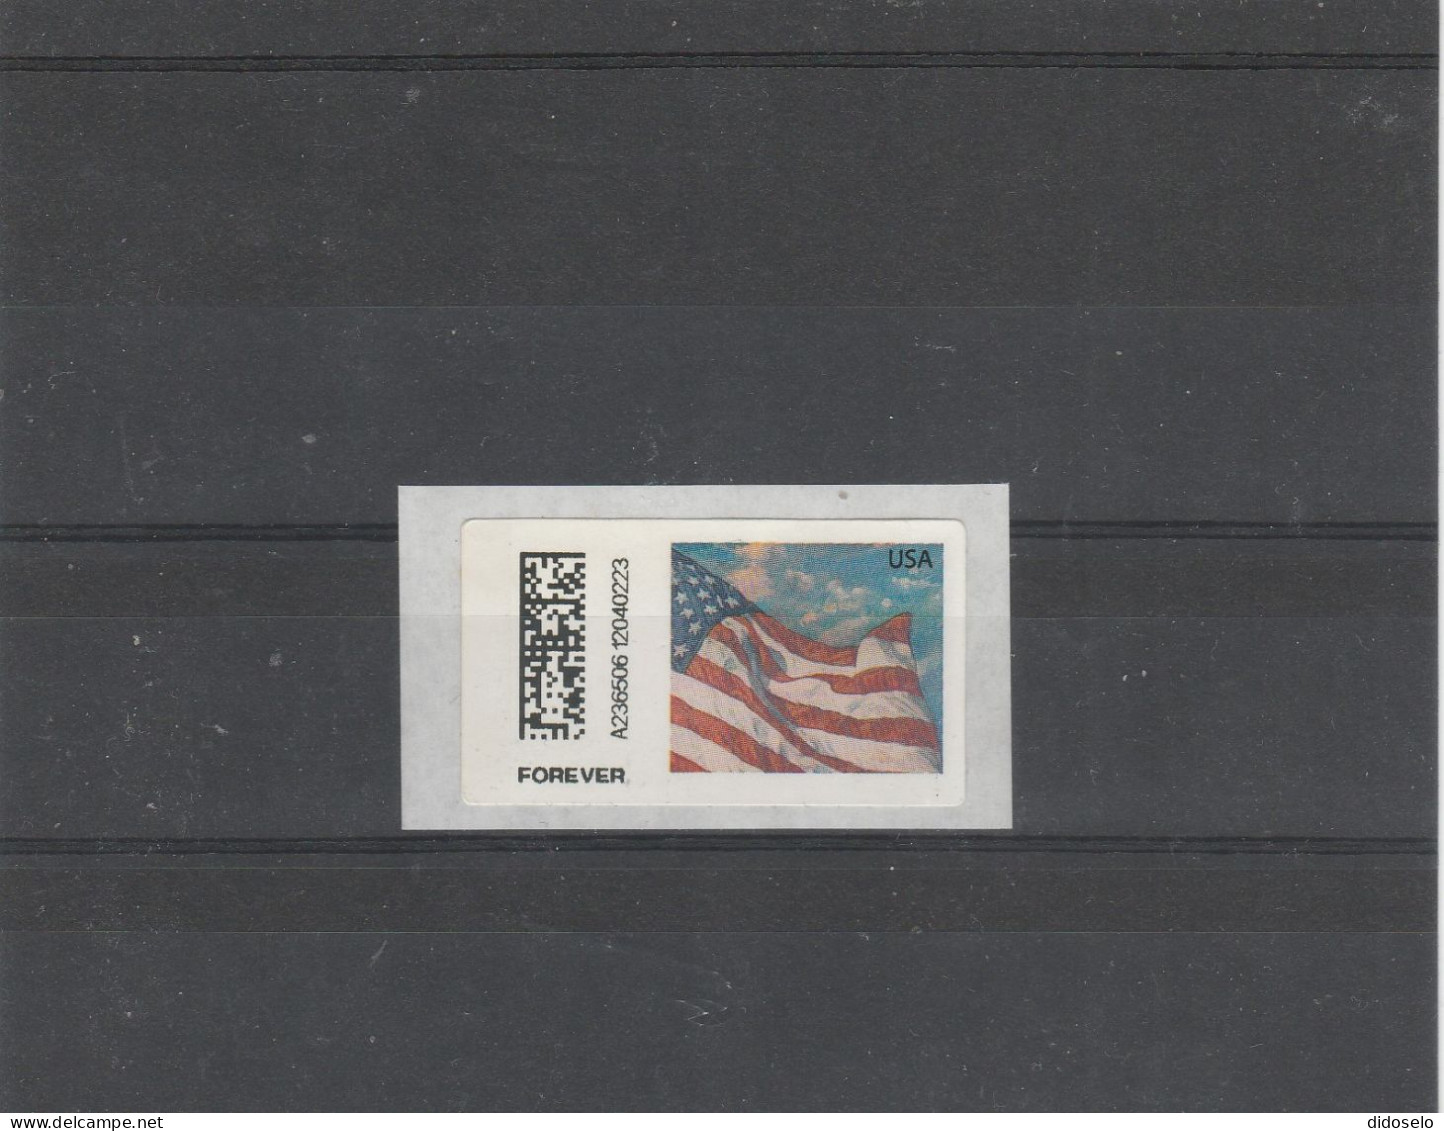 USA - 2023 - ATM Label / Forever / Mint - Machine Labels [ATM]